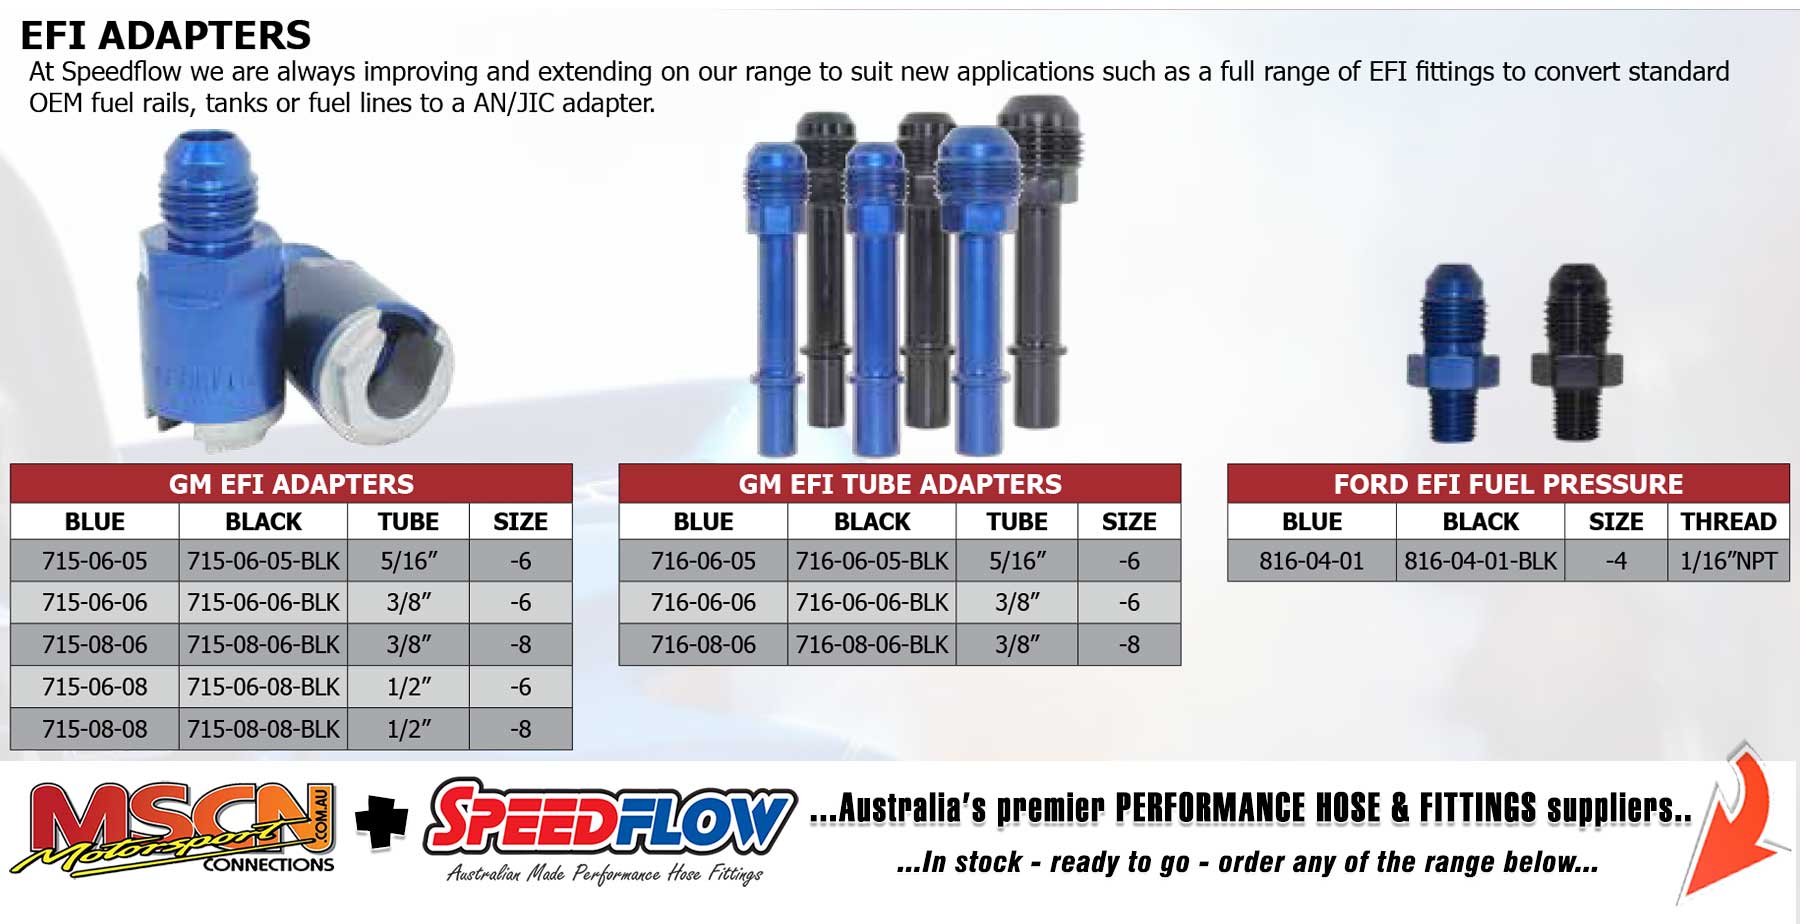 Speedflow 4AN AN4 AN-4 1/16”NPT Thread Ford EFI Fuel Pressure Adapter 816-04-01 